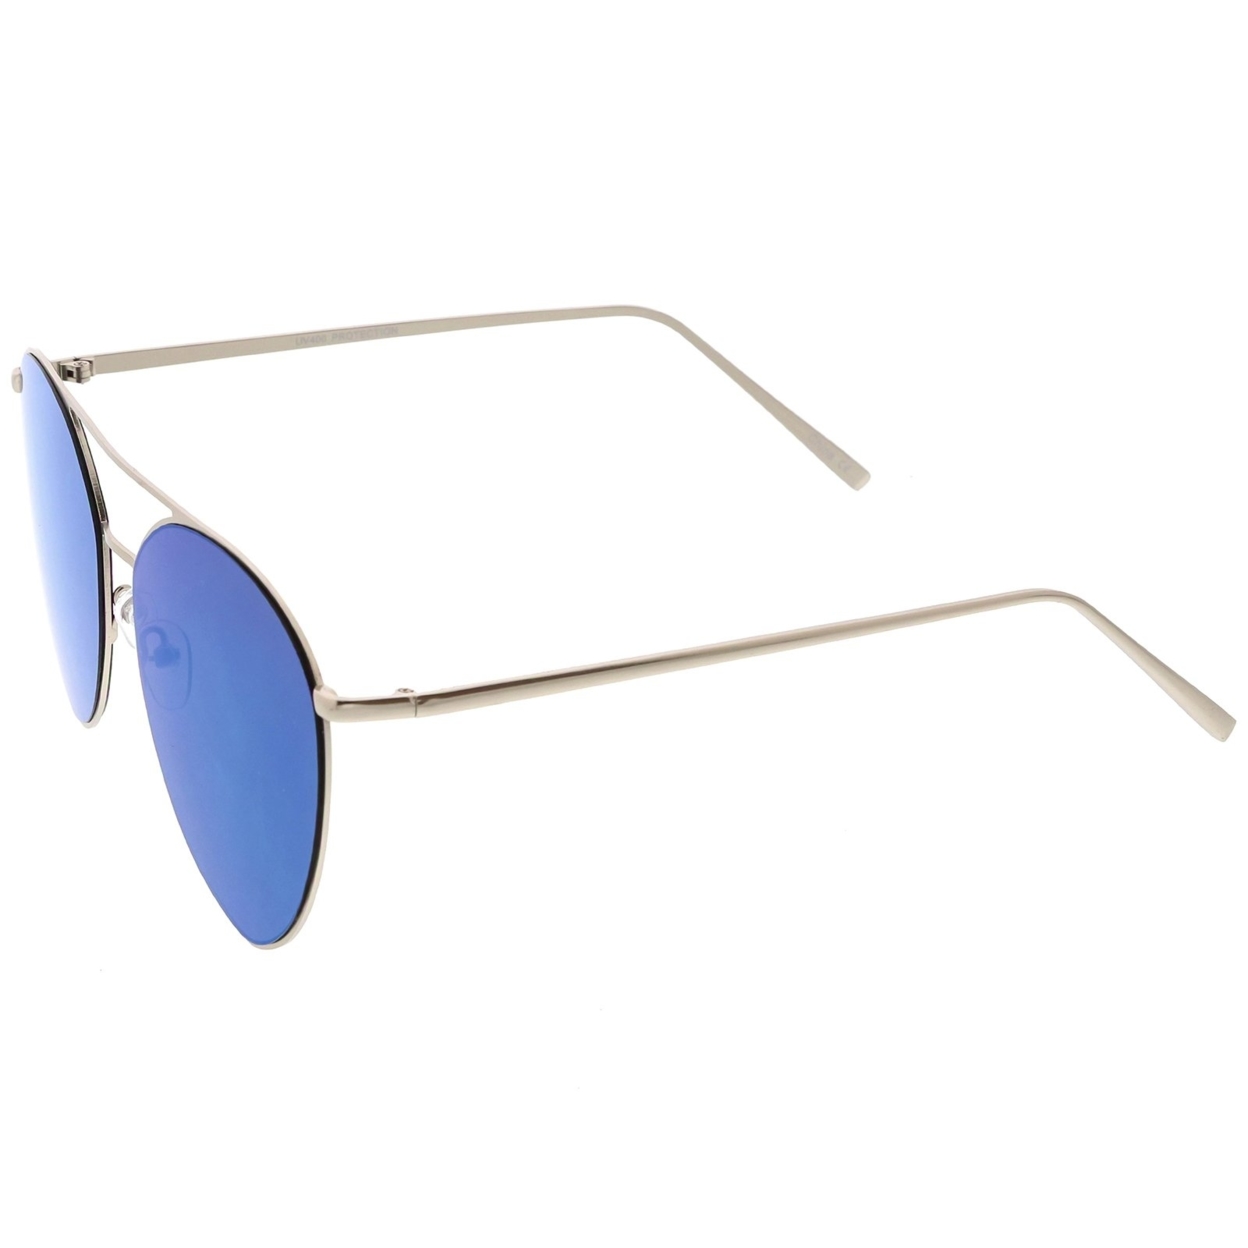 Oversize Thin Metal Aviator Sunglasses Double Crossbar Mirrored Flat Lens 62mm - Silver / Silver Mirror